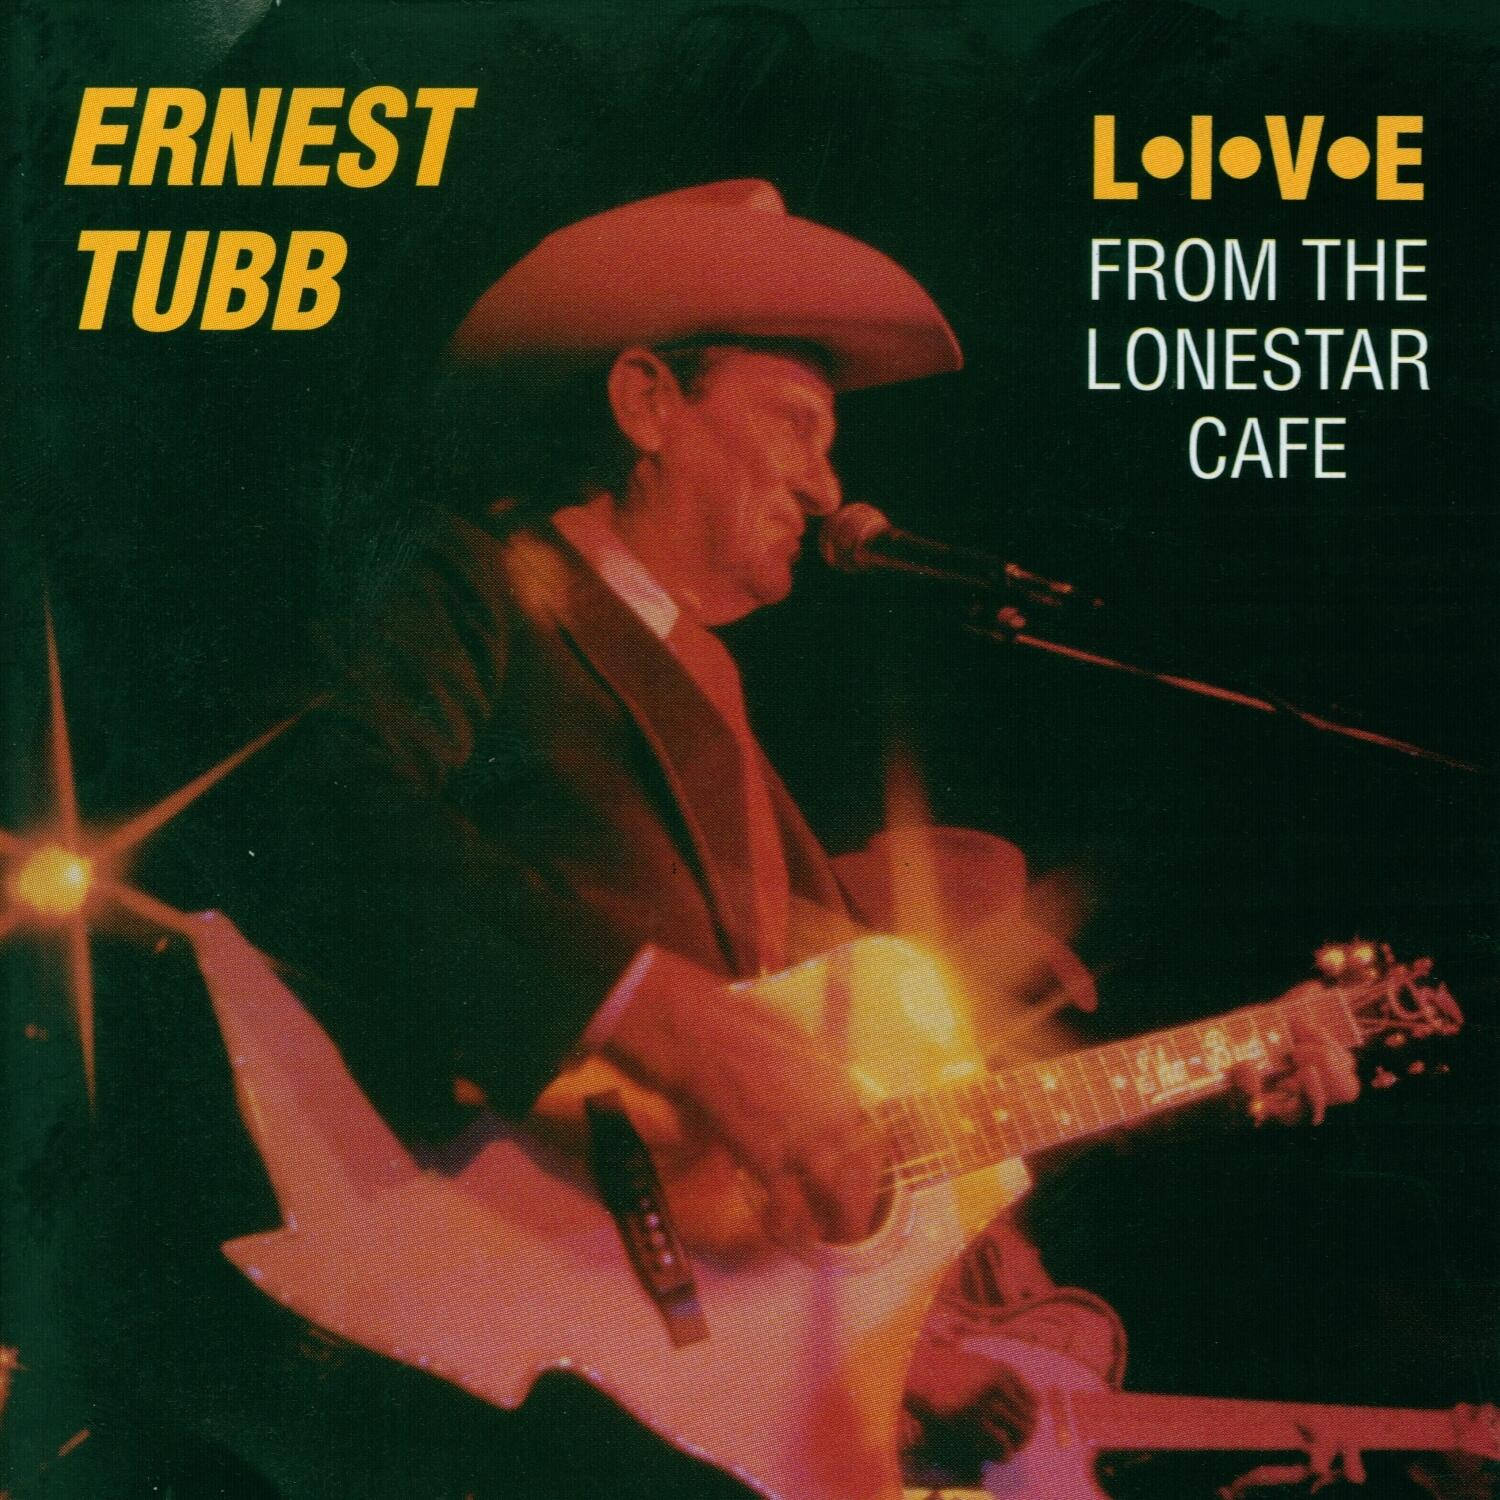 Ernesttubb Waltz Across Texas Album - Ernest Tubbs Vals Genom Texas-albumet. Wallpaper